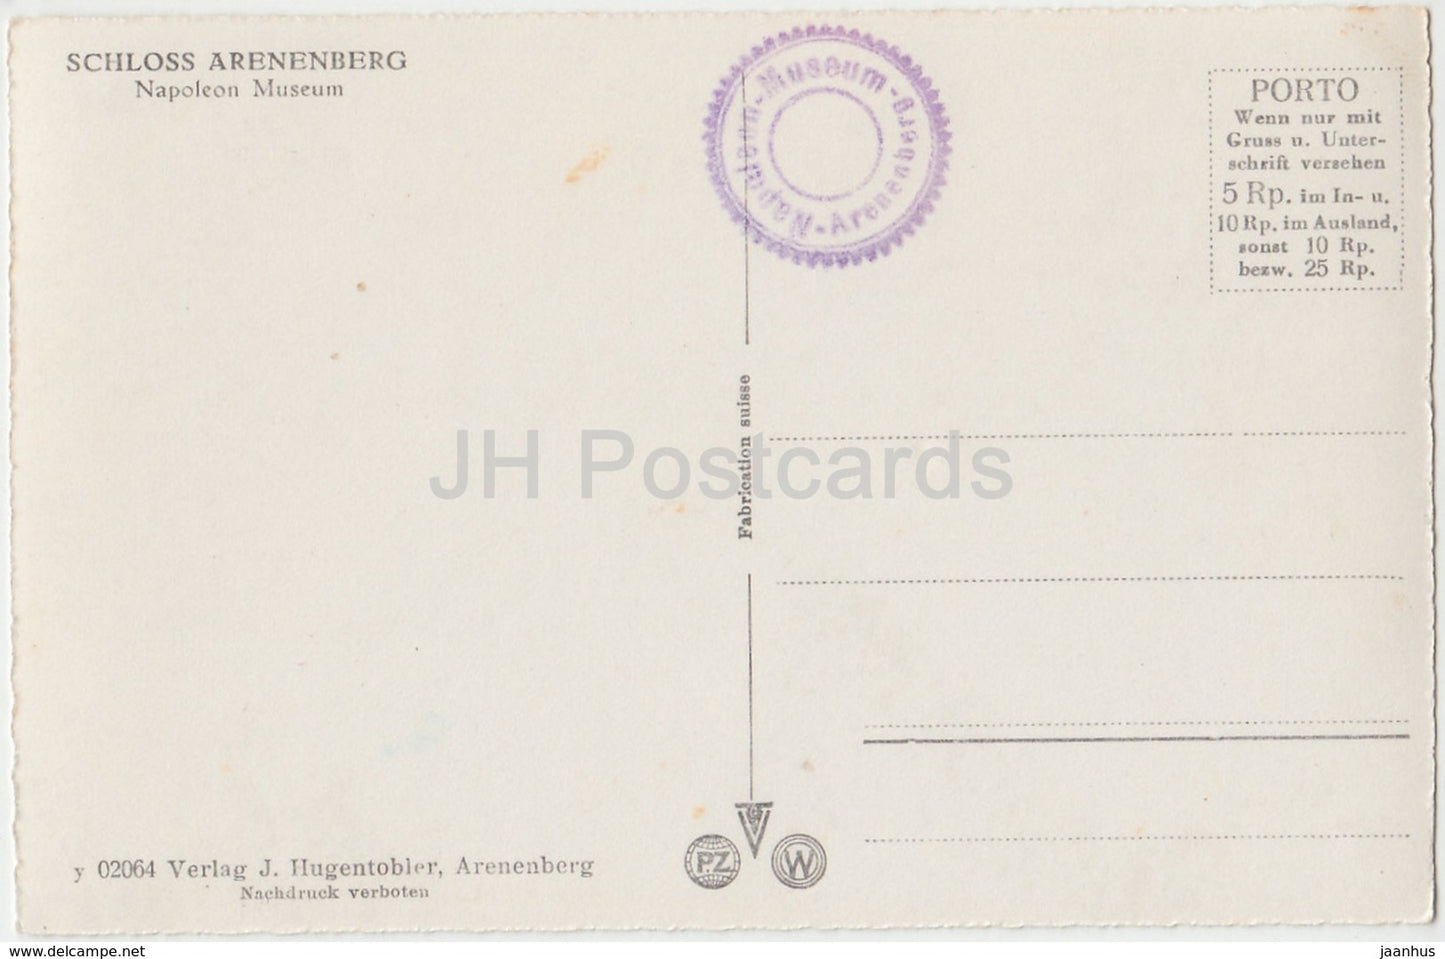 Schloss Arenenberg - Napoleon-Museum - castle - museum - 02064 - Switzerland - old postcard - unused